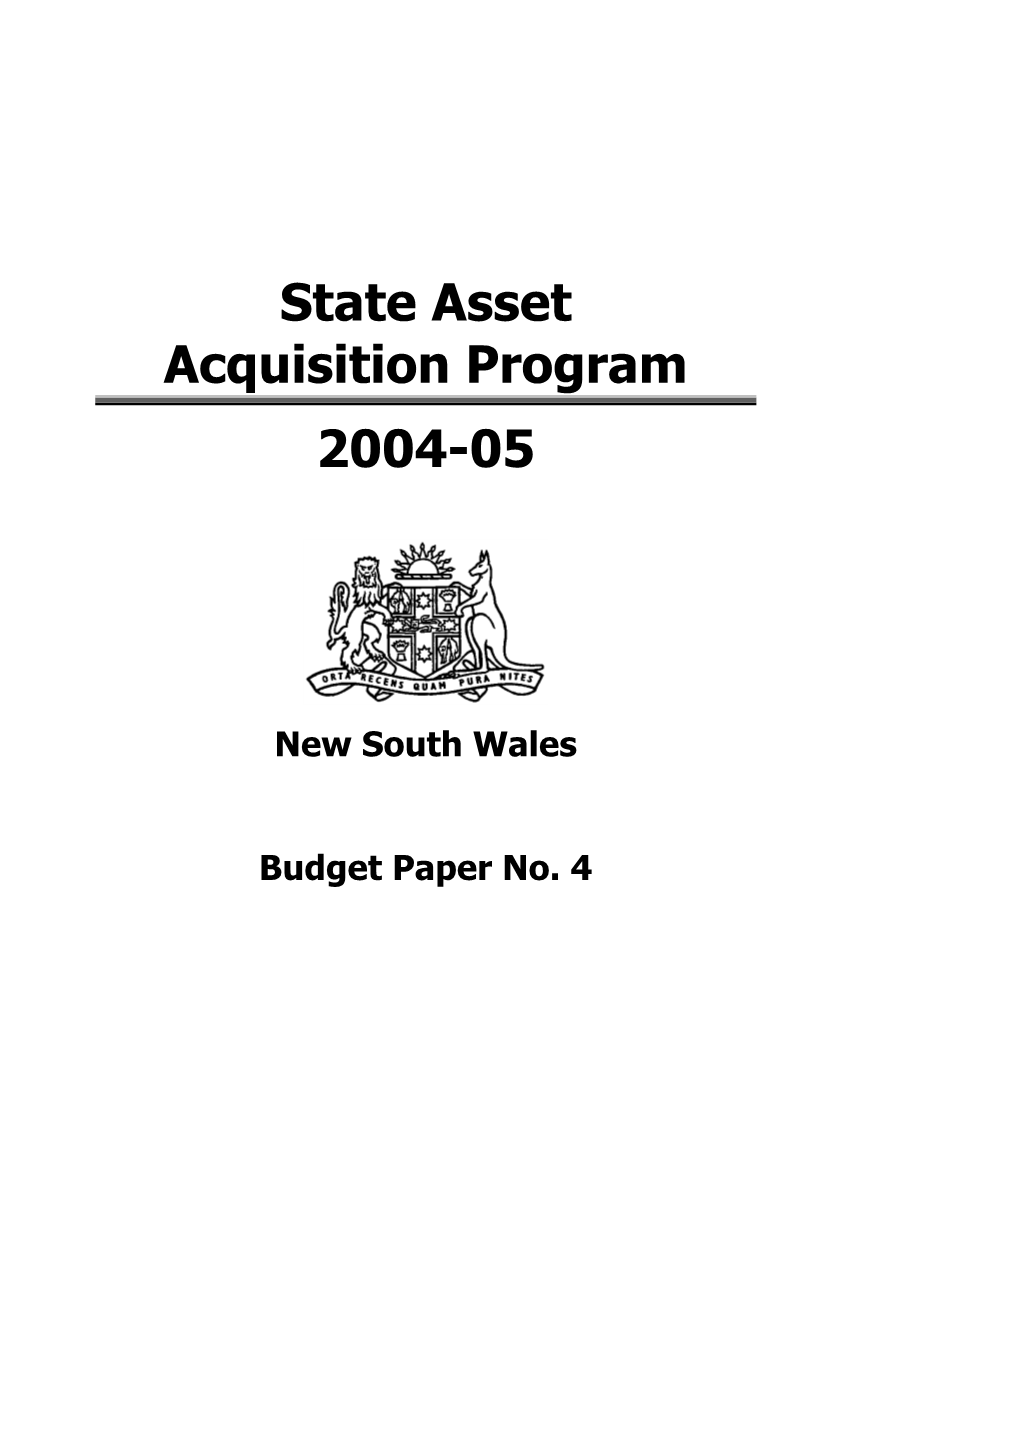 State Asset Acquisition Program 2004-05